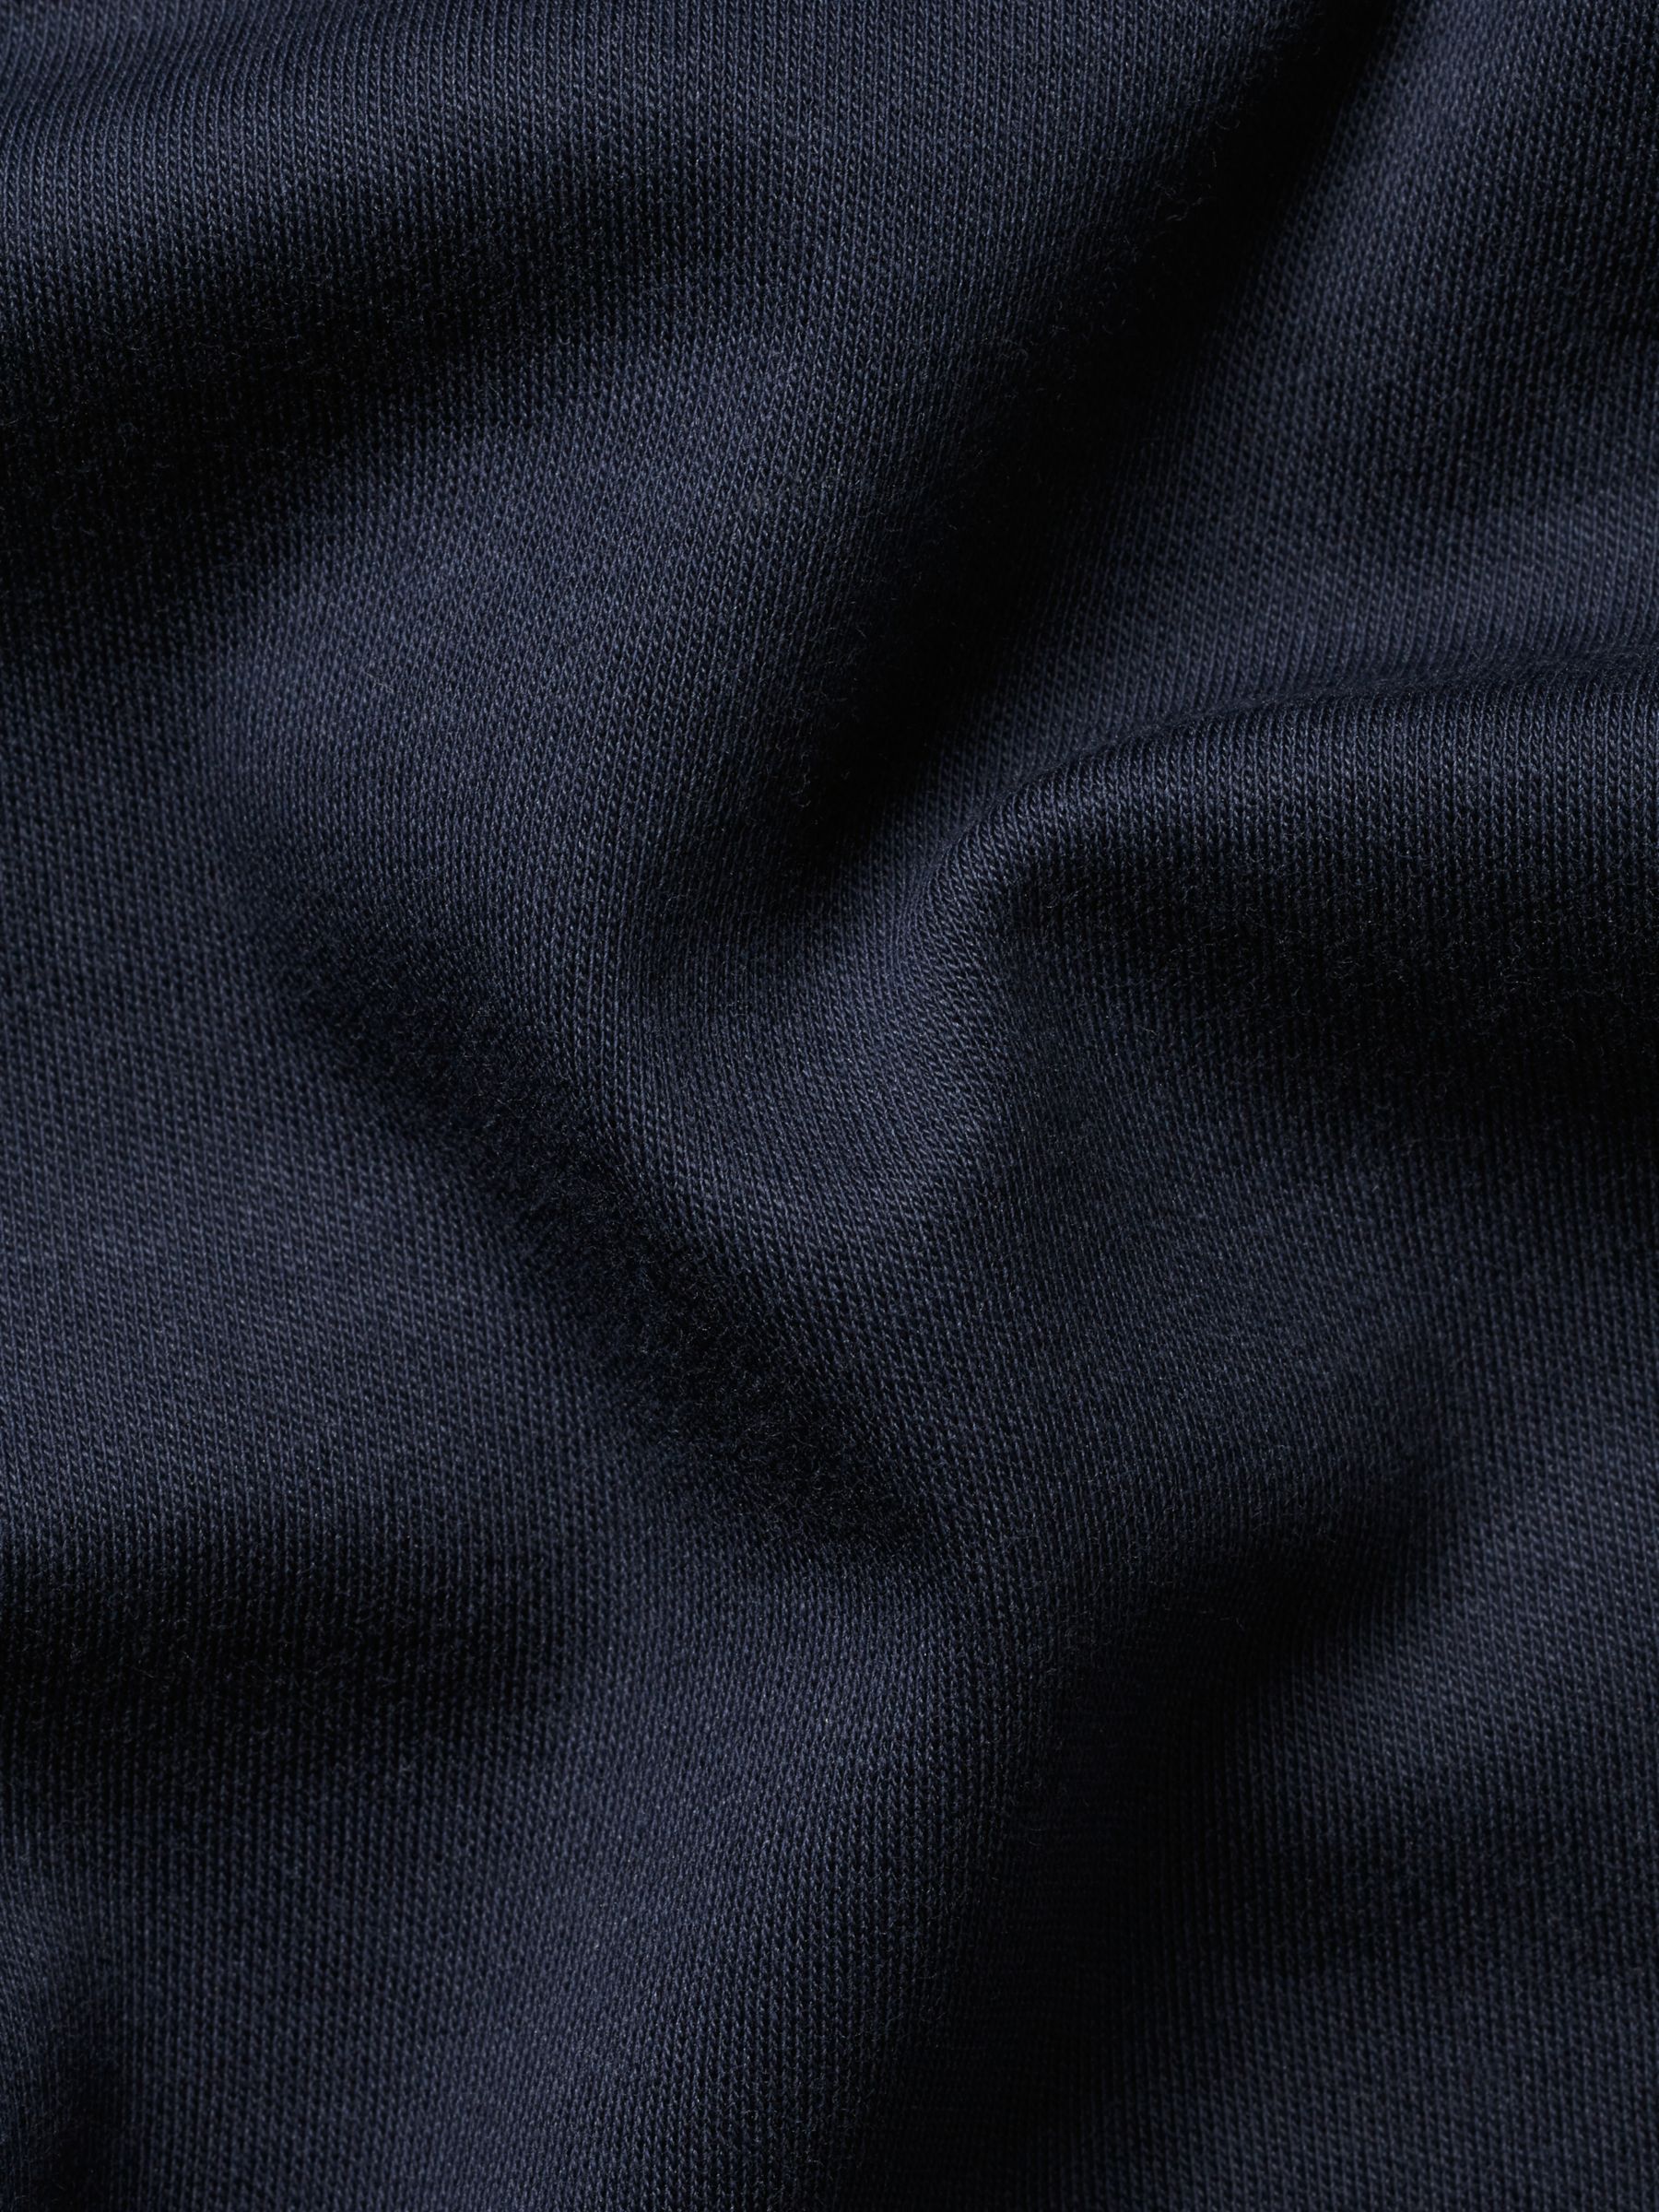 Charles Tyrwhitt Smart Long Sleeve Jersey Polo at John Lewis & Partners